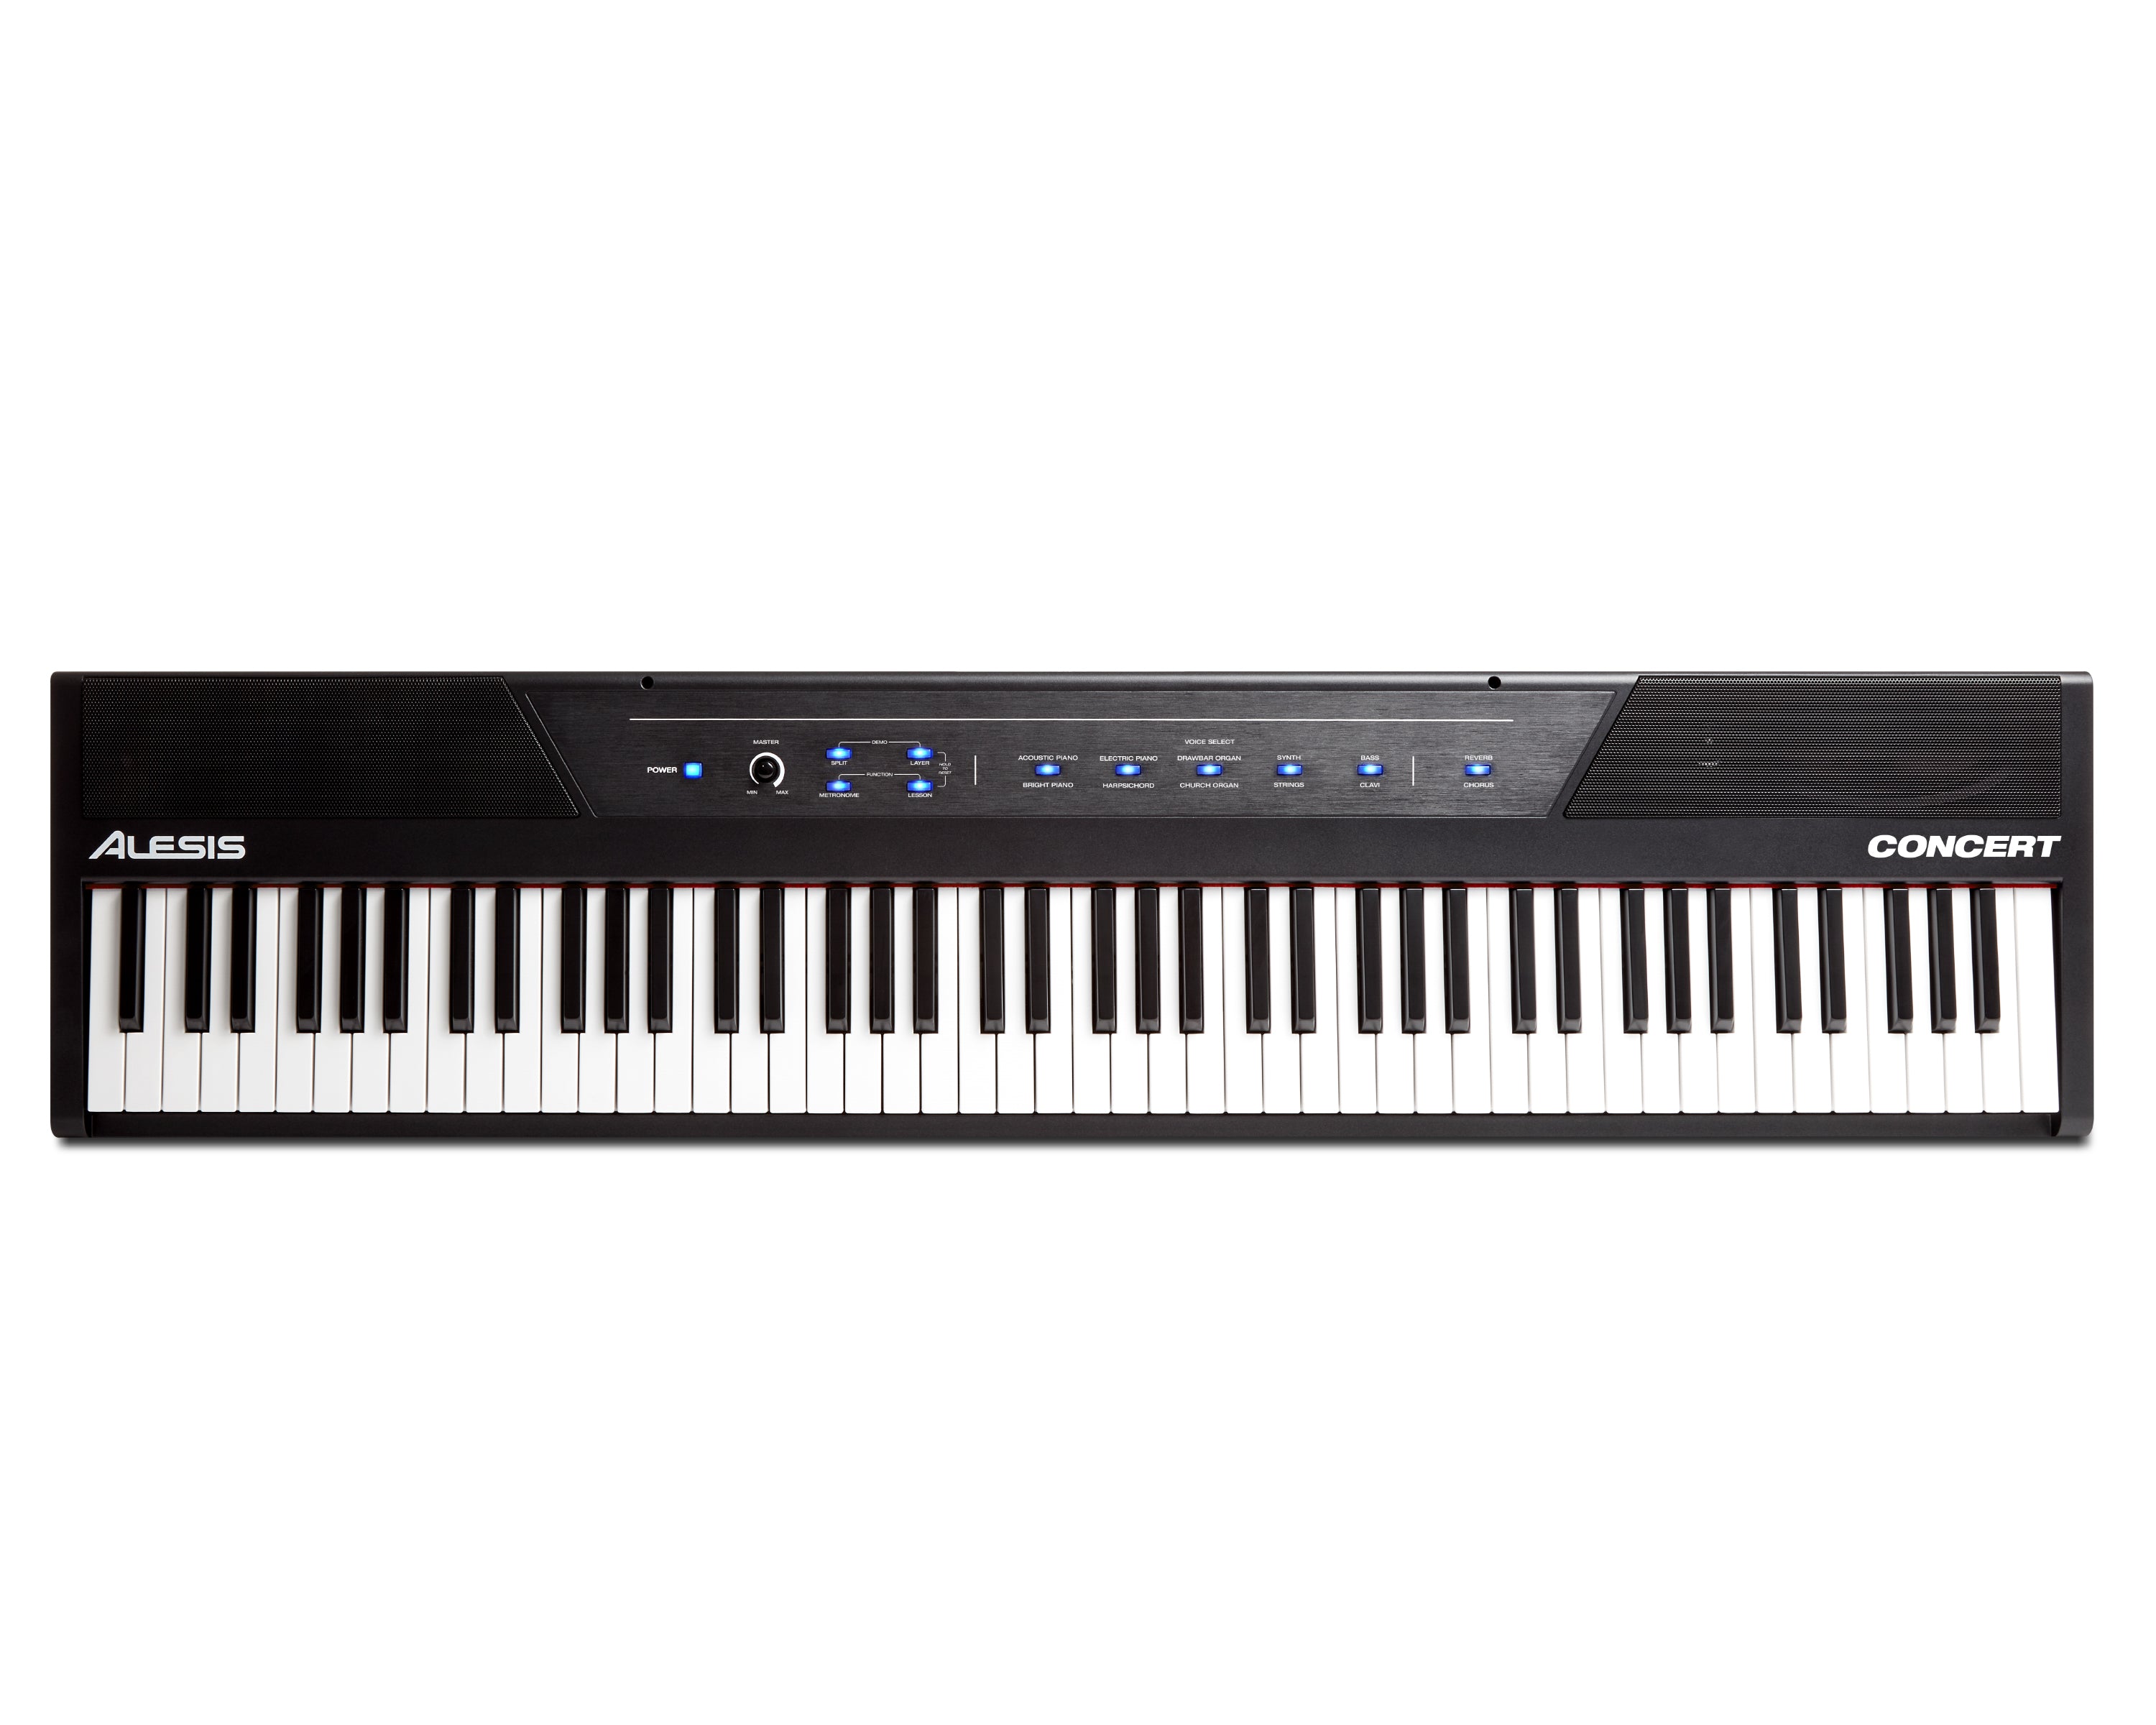 Alesis Concert Digital Piano w/ 88 Full-Sized Keys